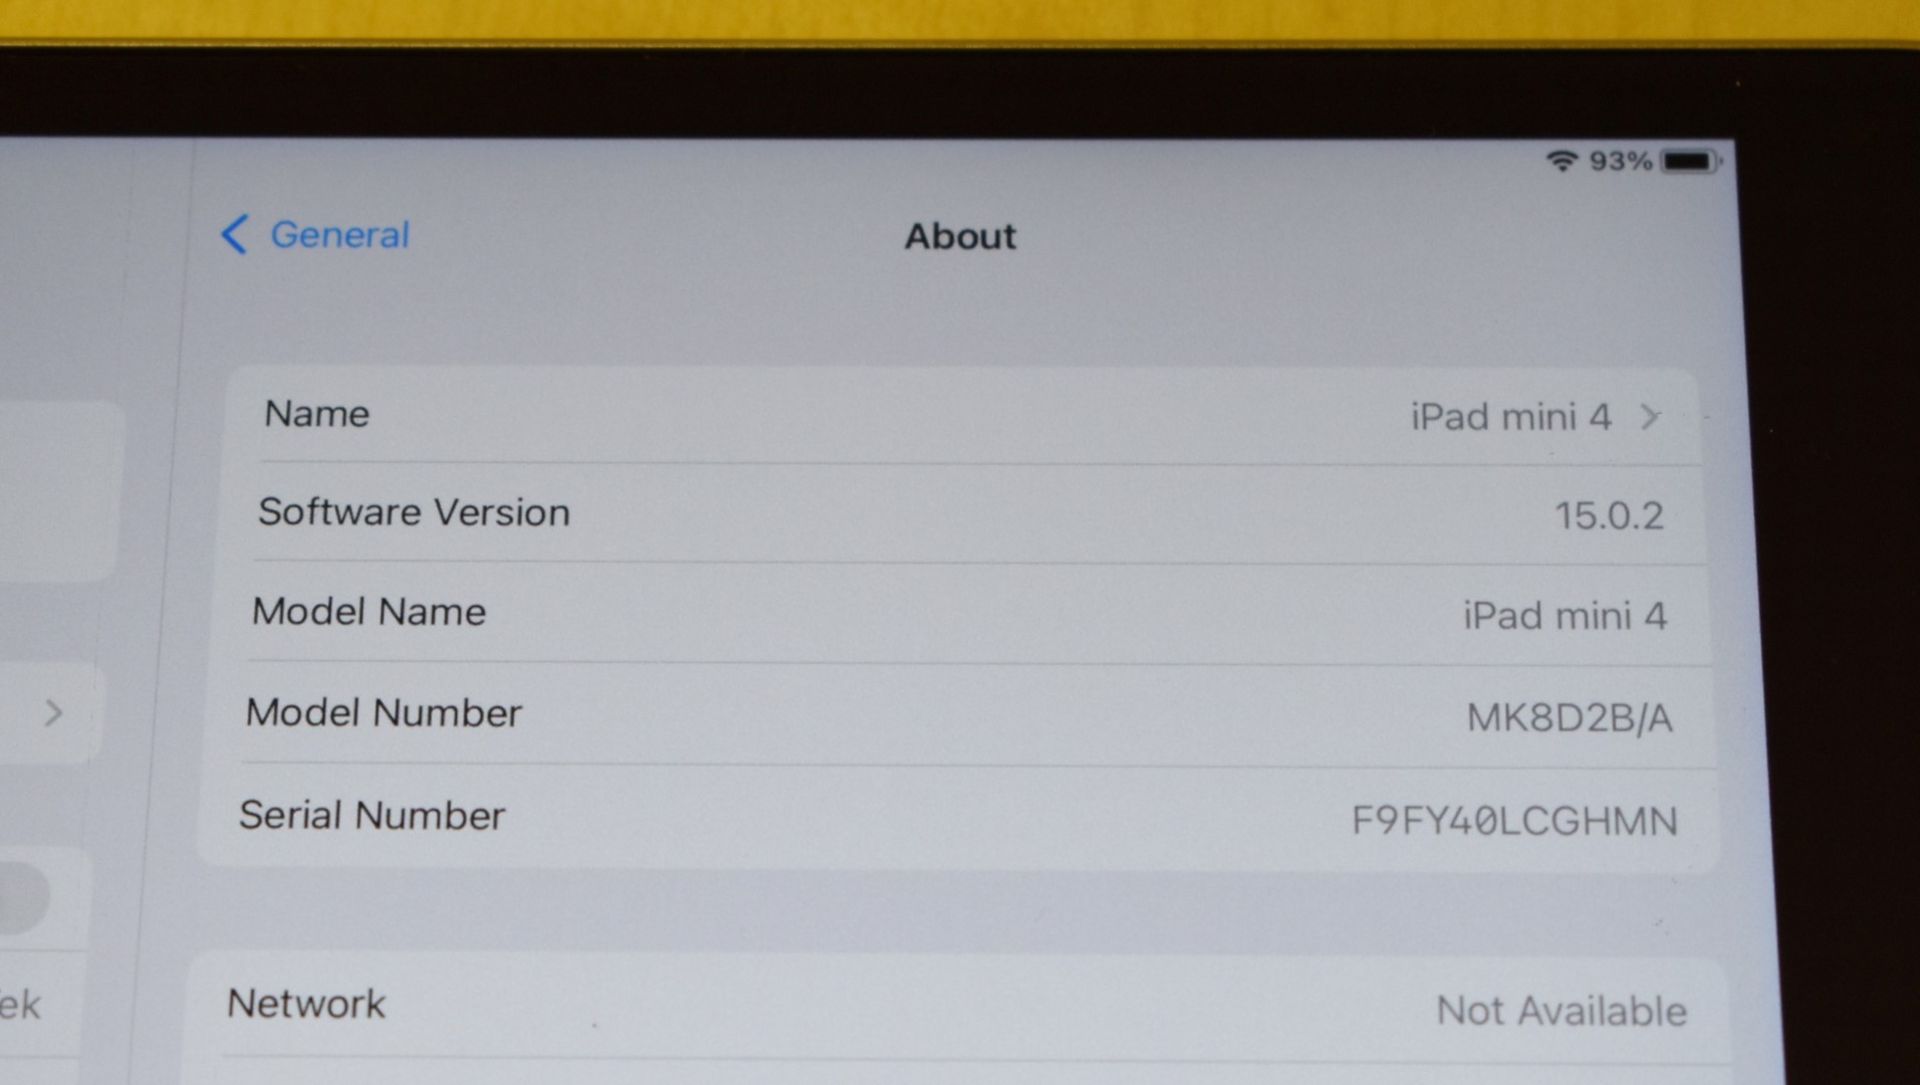 1 x Apple iPad Mini 4 Cellular - 128gb in Space Grey - Model MK8D2B/A - A8 Processor - 7.9" Screen - Image 4 of 4